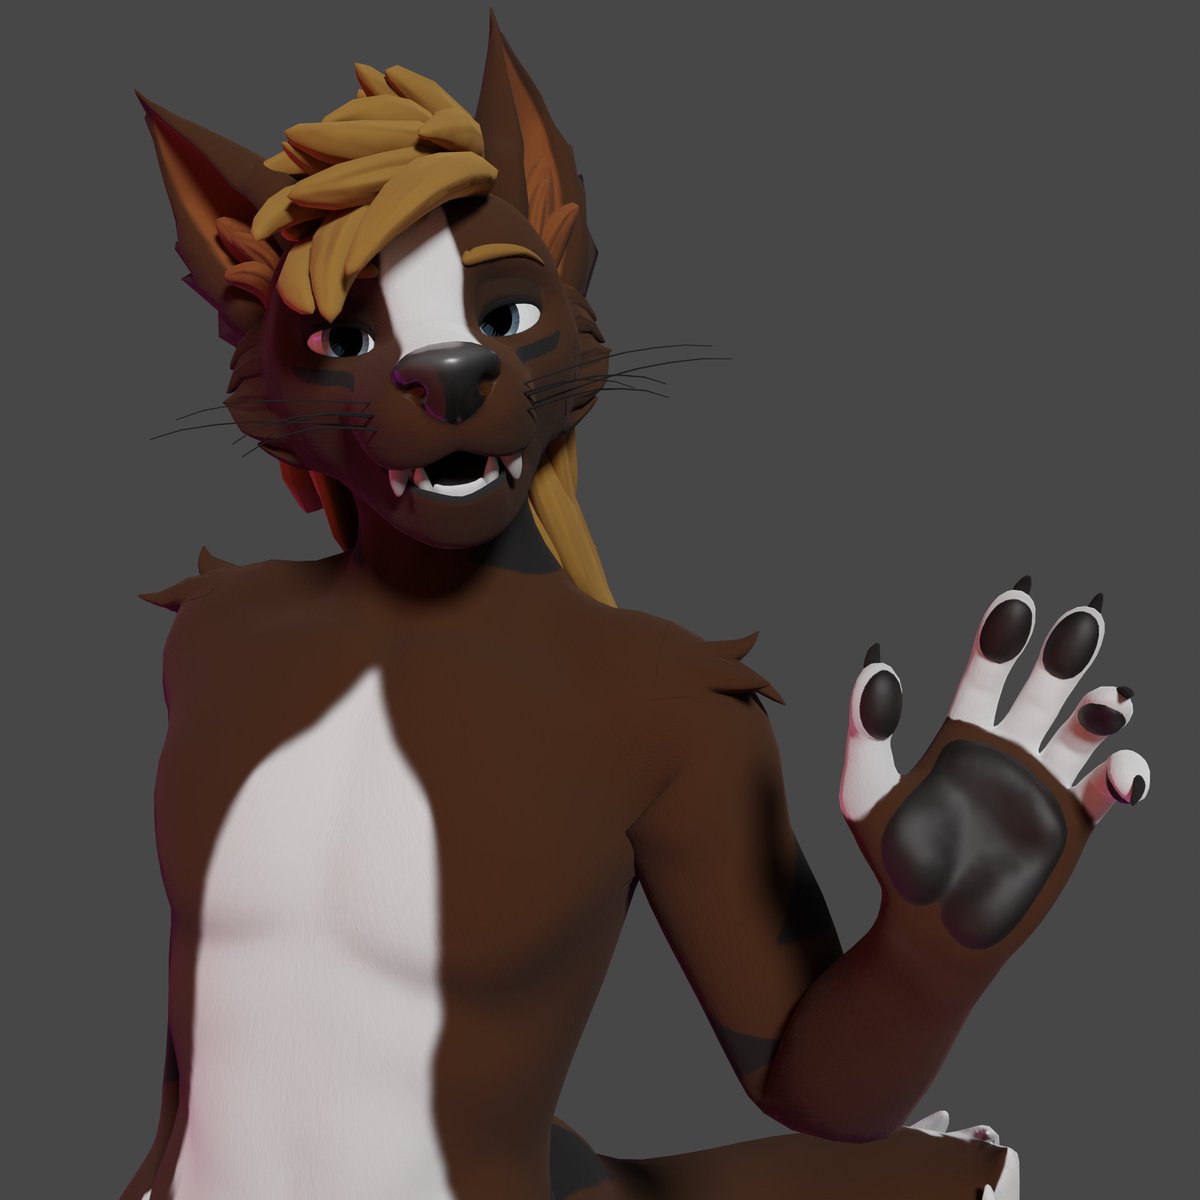 i made a render out of boredom with my vrc avatar

soooooo, wolfdoggo says hello